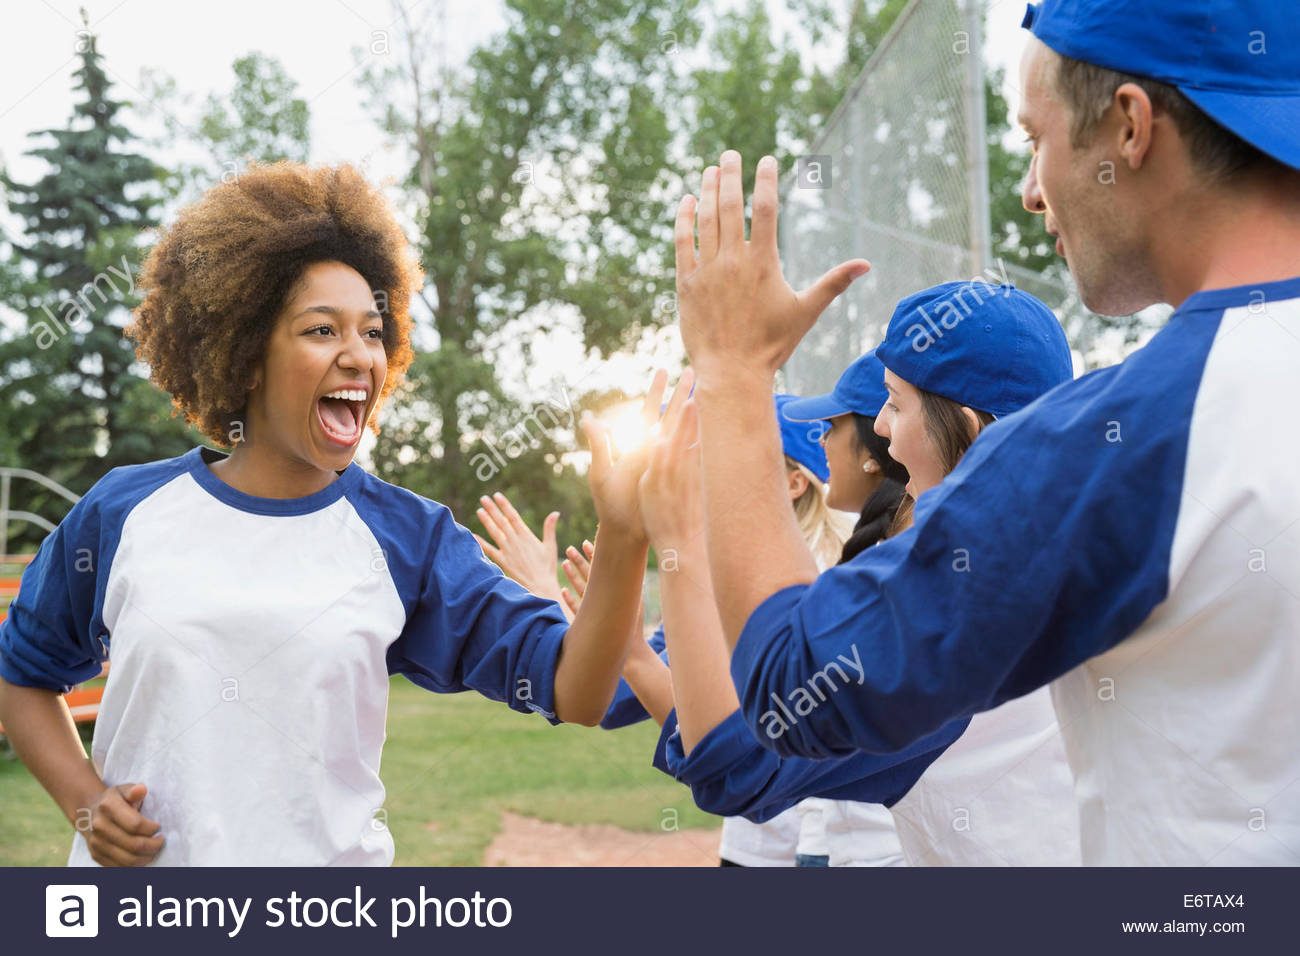 Baseball team high filing on field Stock Photo